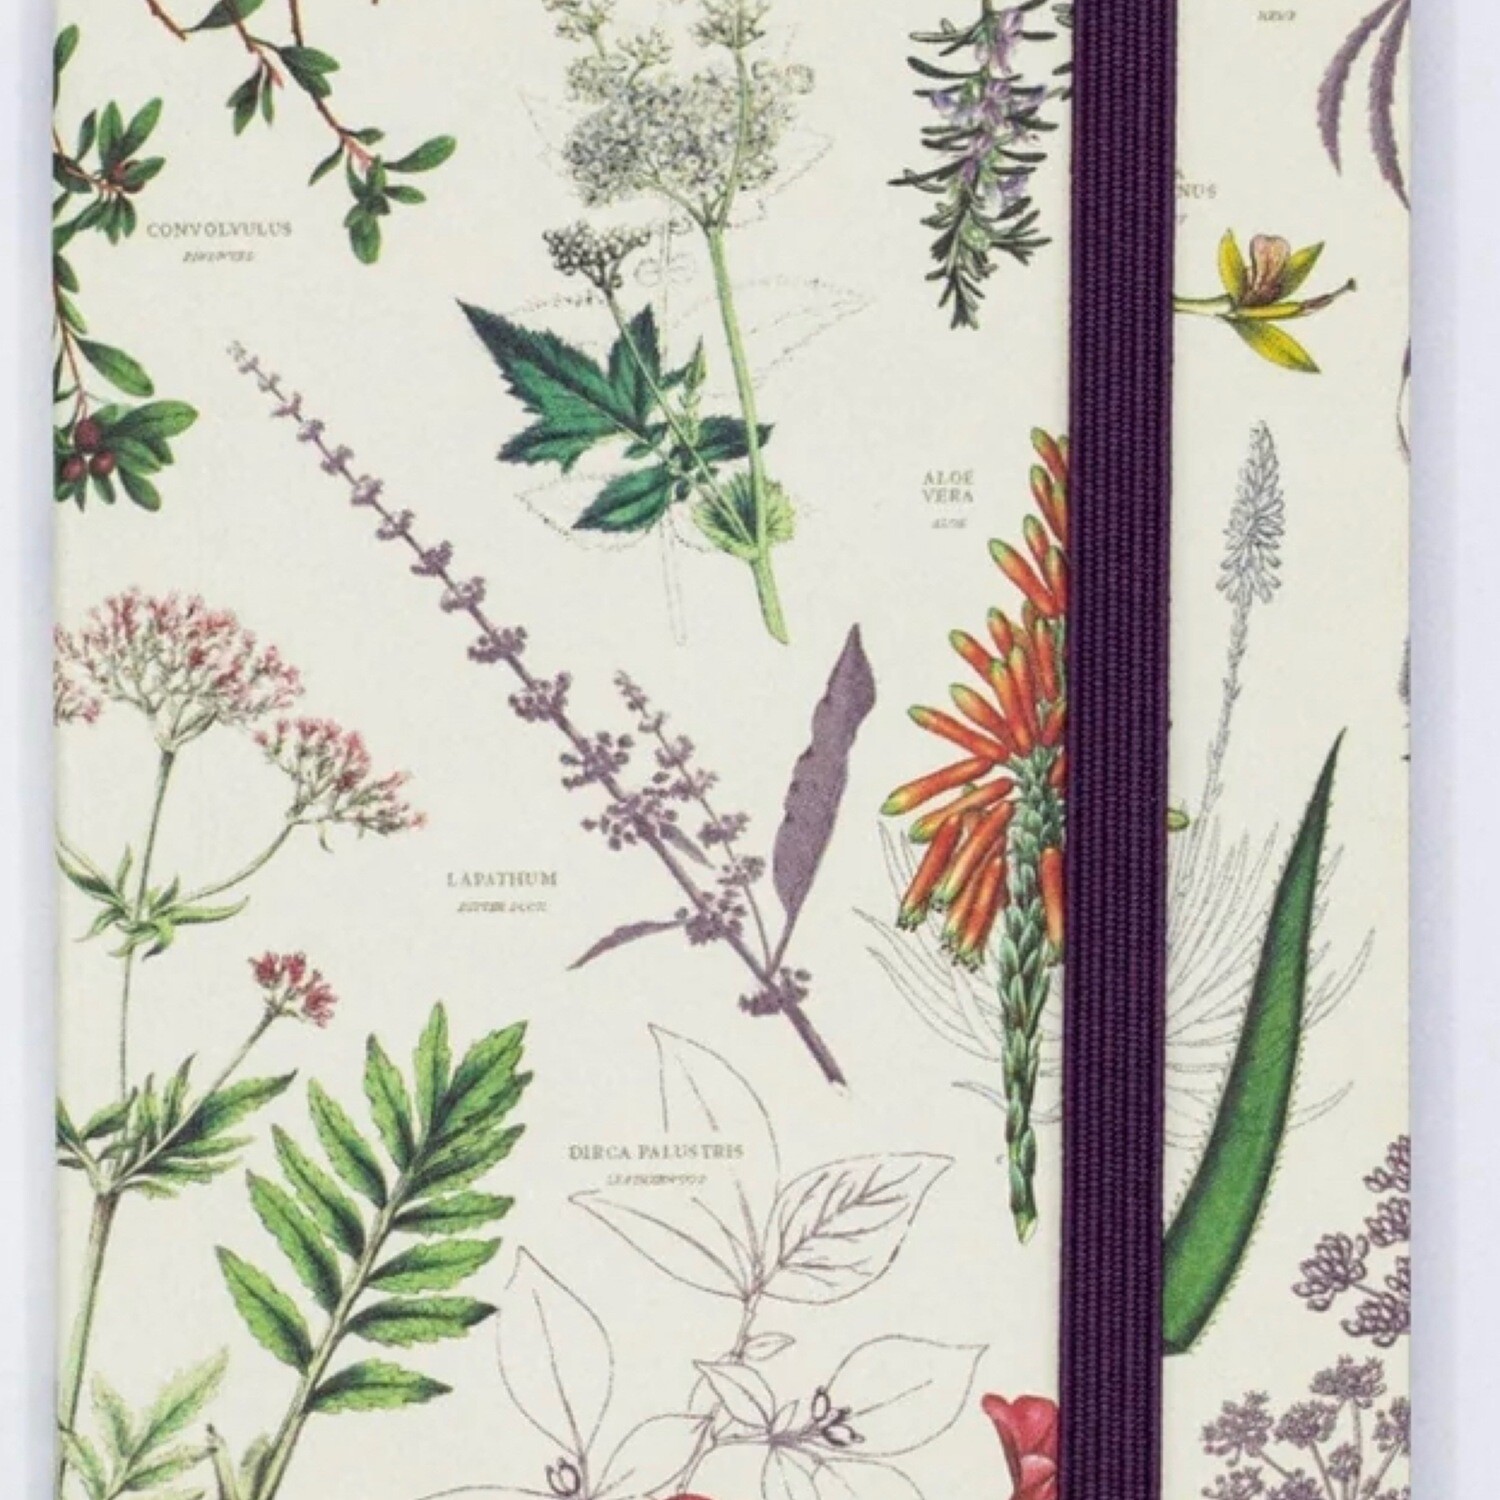 Medicinal Botany A5 Notebook (Blank & Lined)